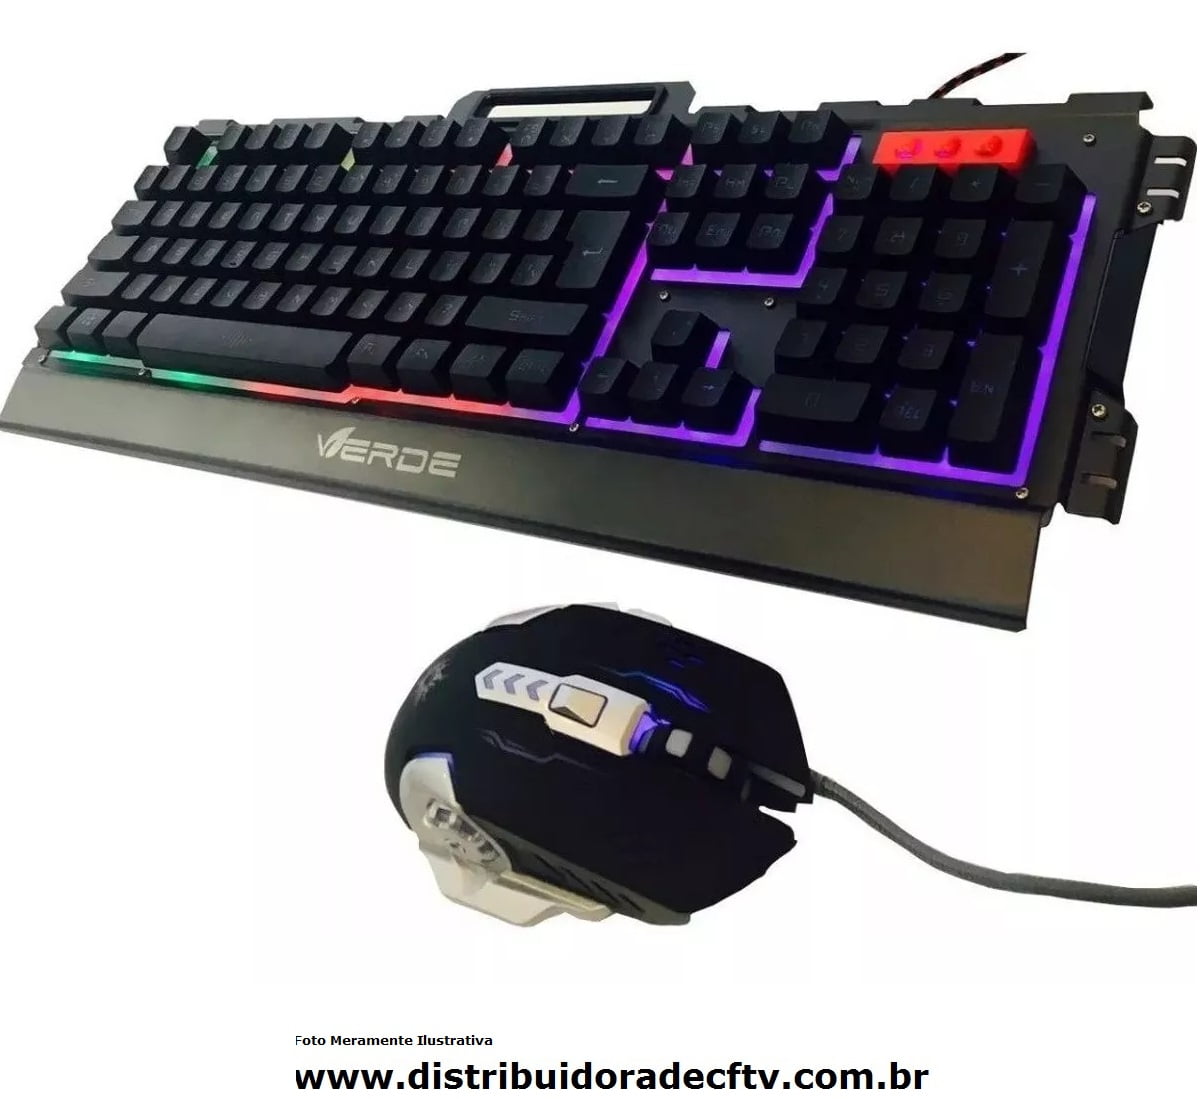 Kit Teclado E Mouse Gamer Com Fio Jp-133 Top